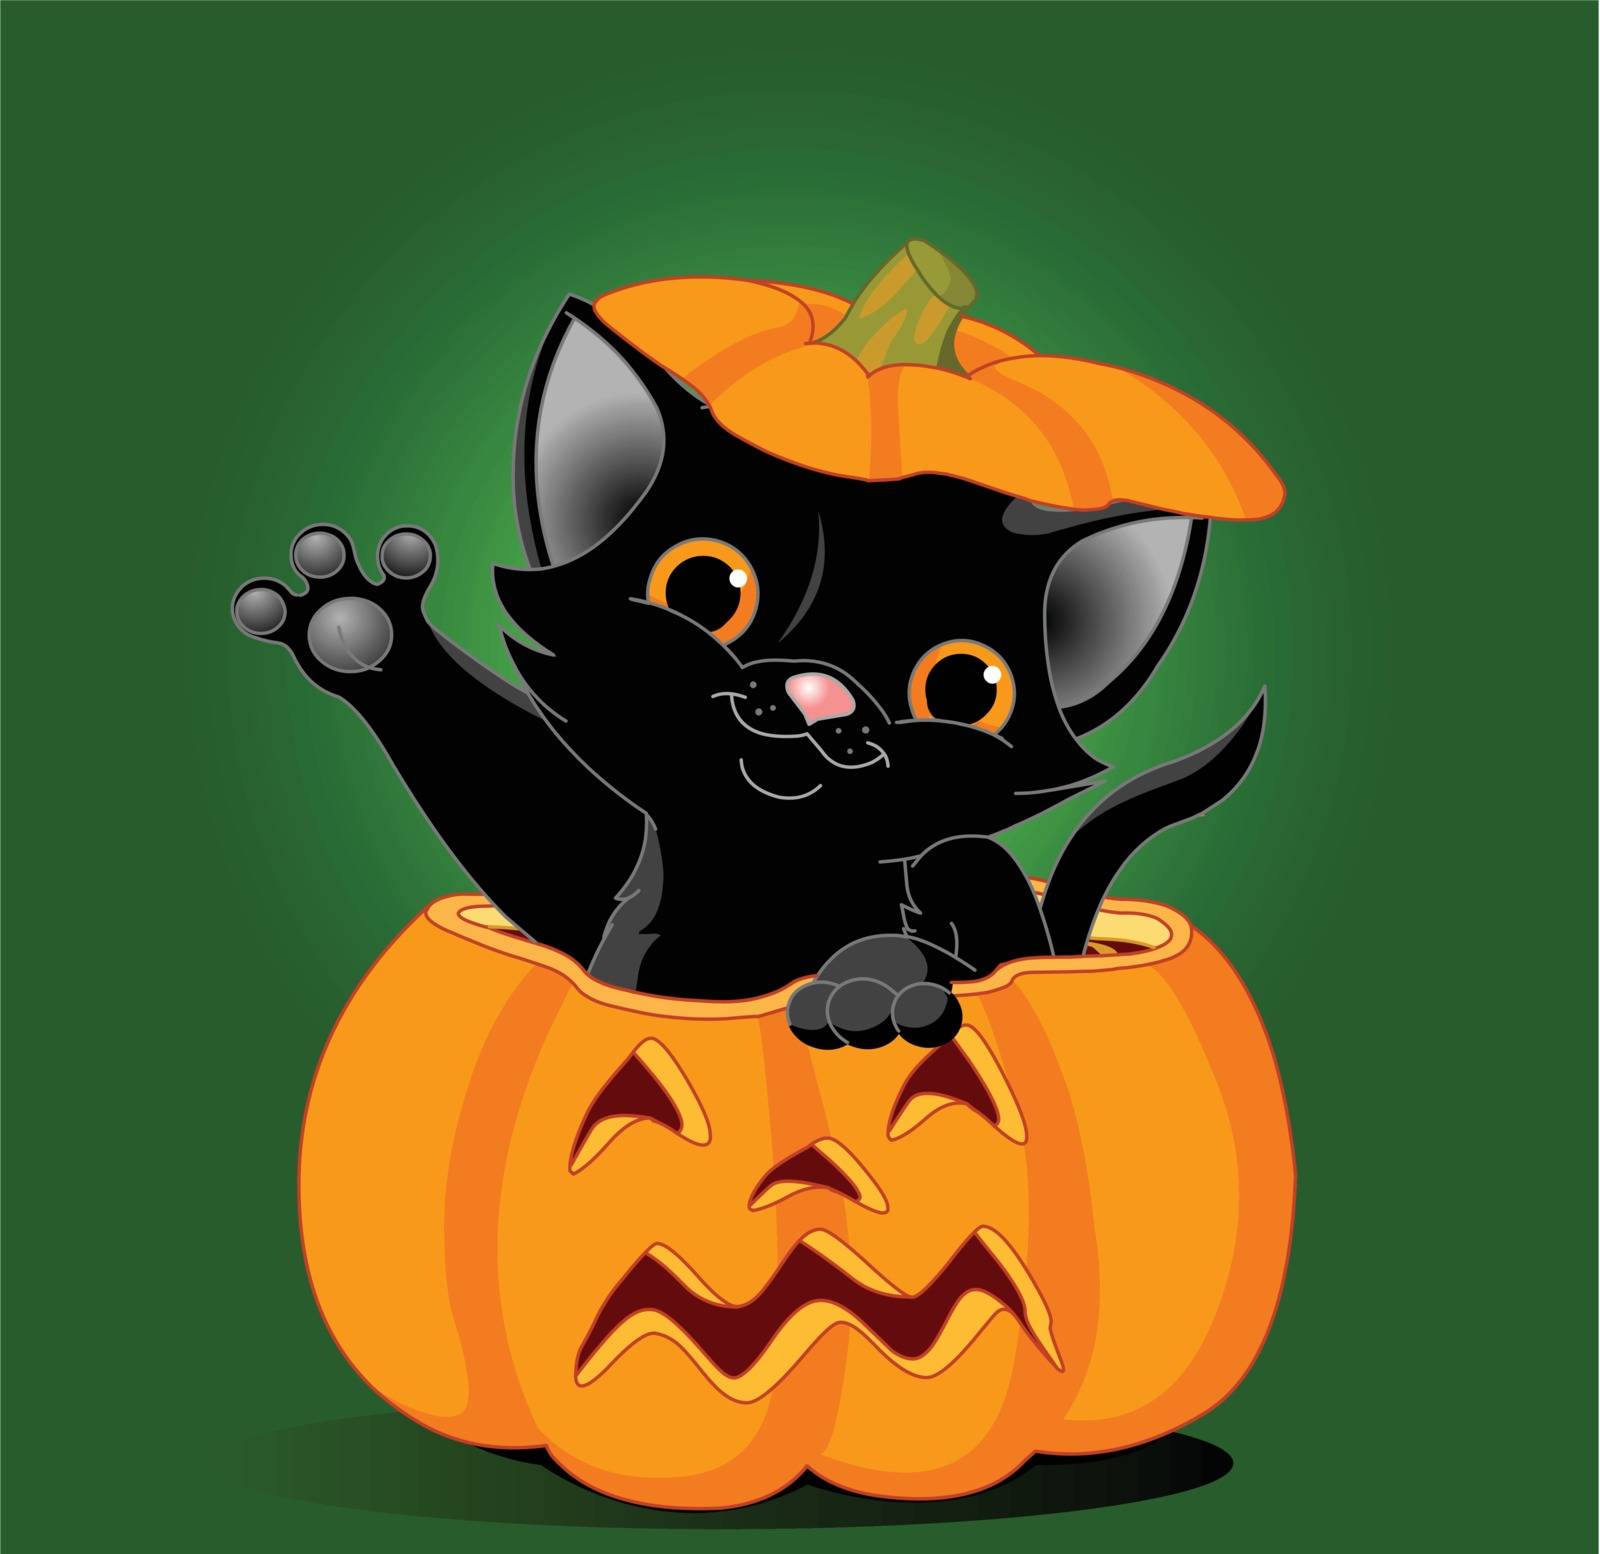 Cat in pumpkin by Dazdraperma